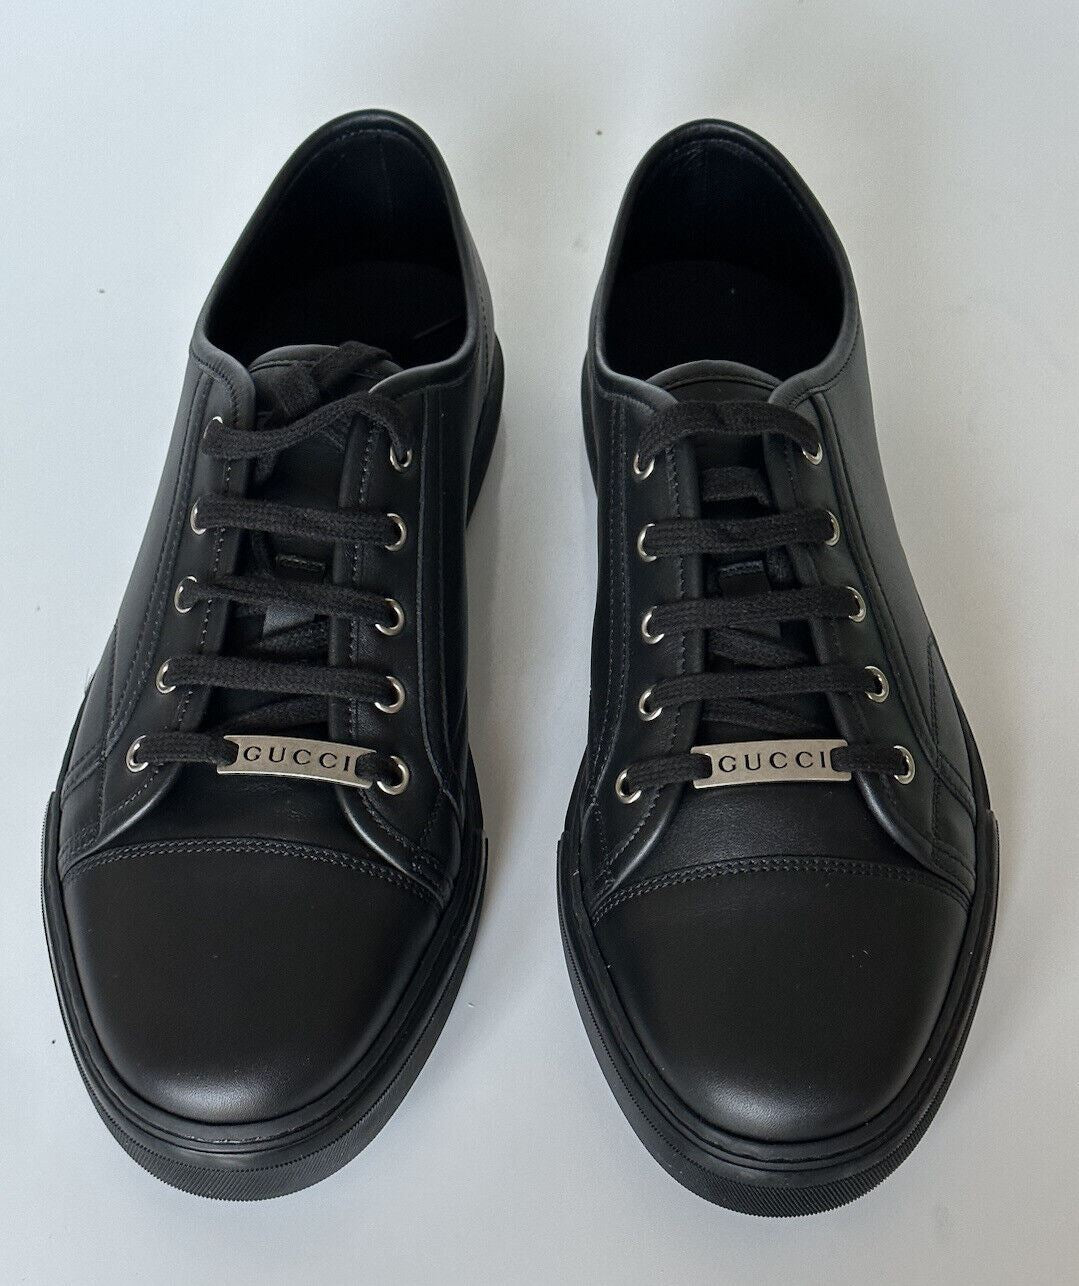 Gucci Men's Low-top Black Soft Leather Sneakers 10.5 US (Gucci 10) 423301 IT NIB